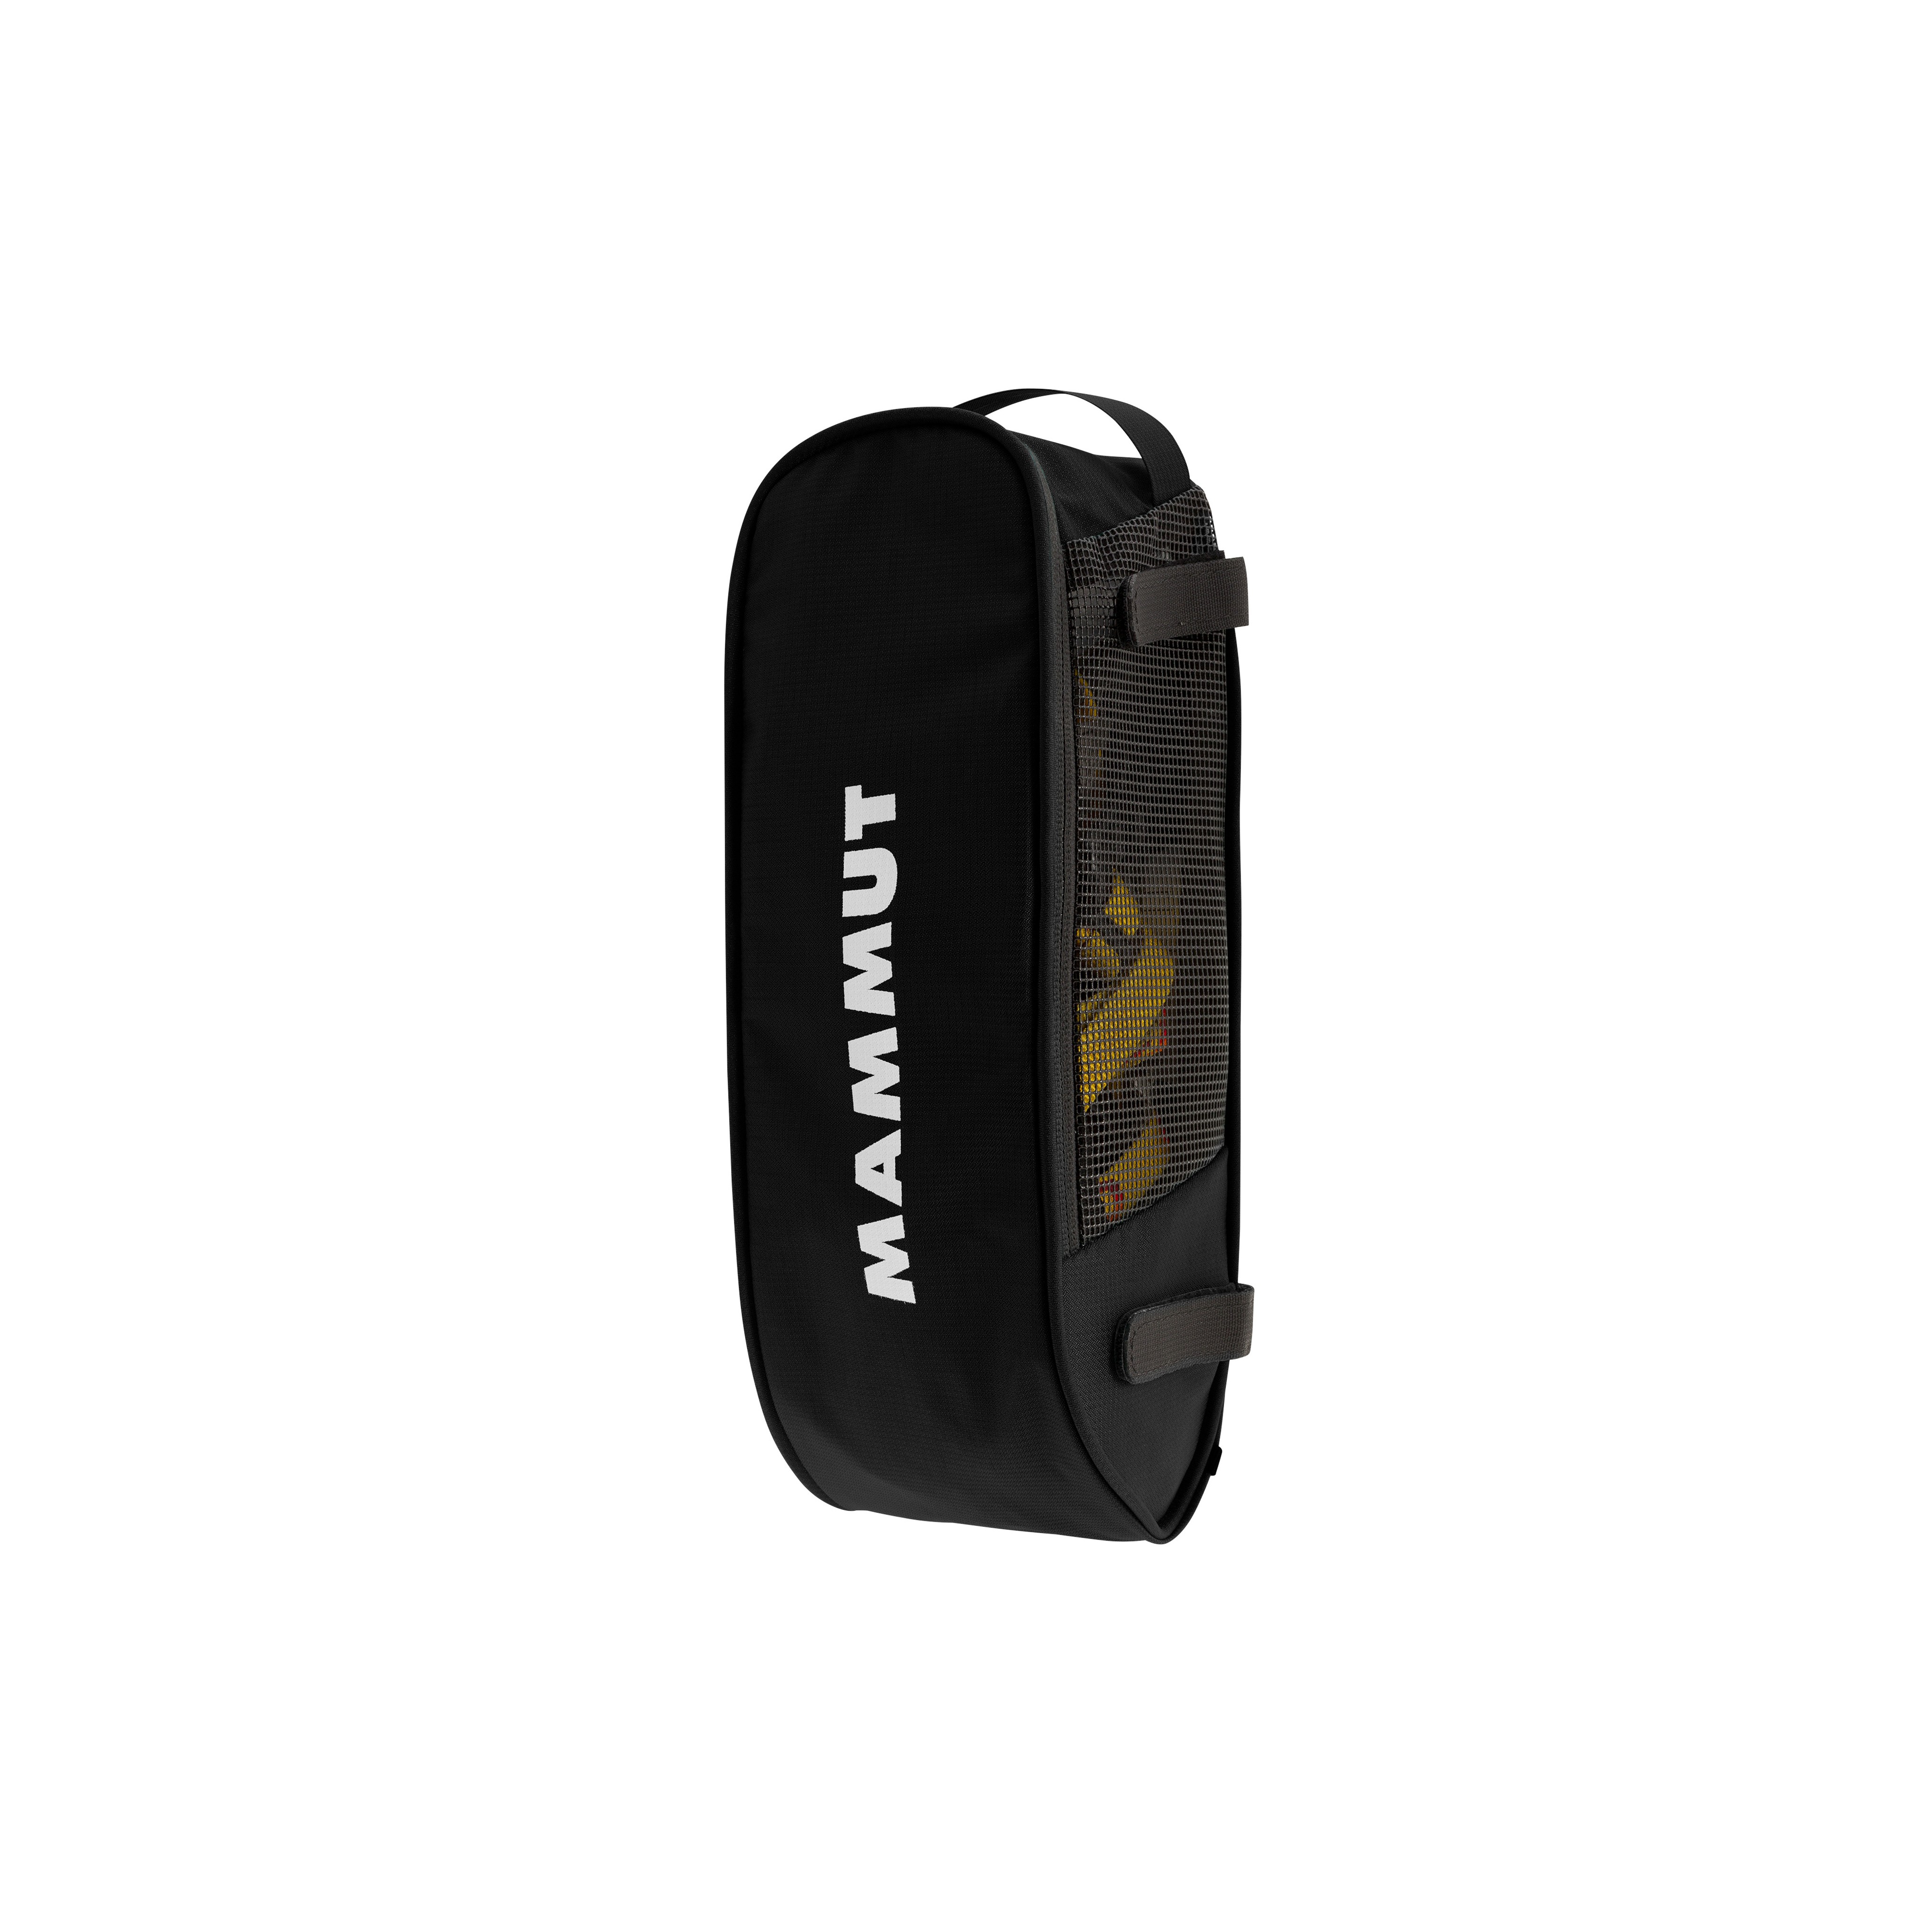 Crampon Pocket - black, one size thumbnail